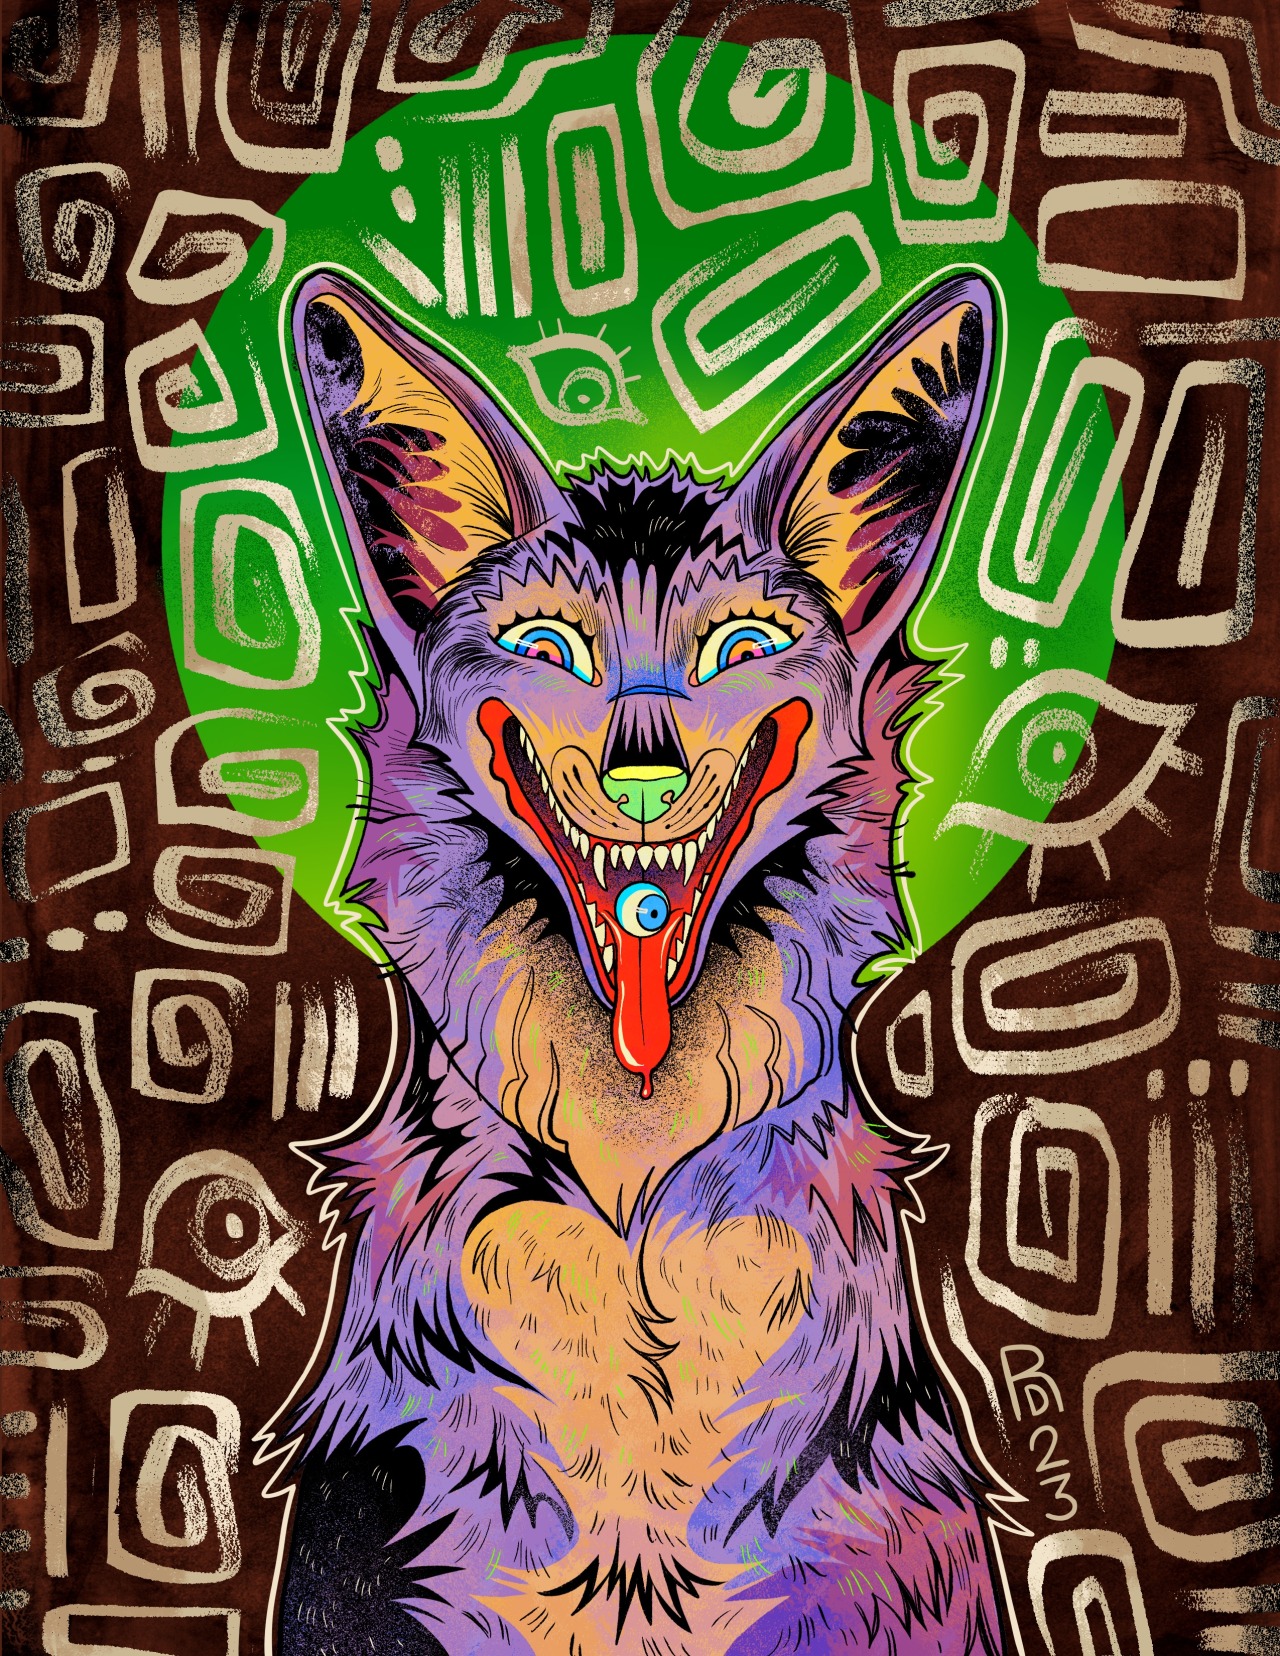 “Take a bite” – coyote illustration